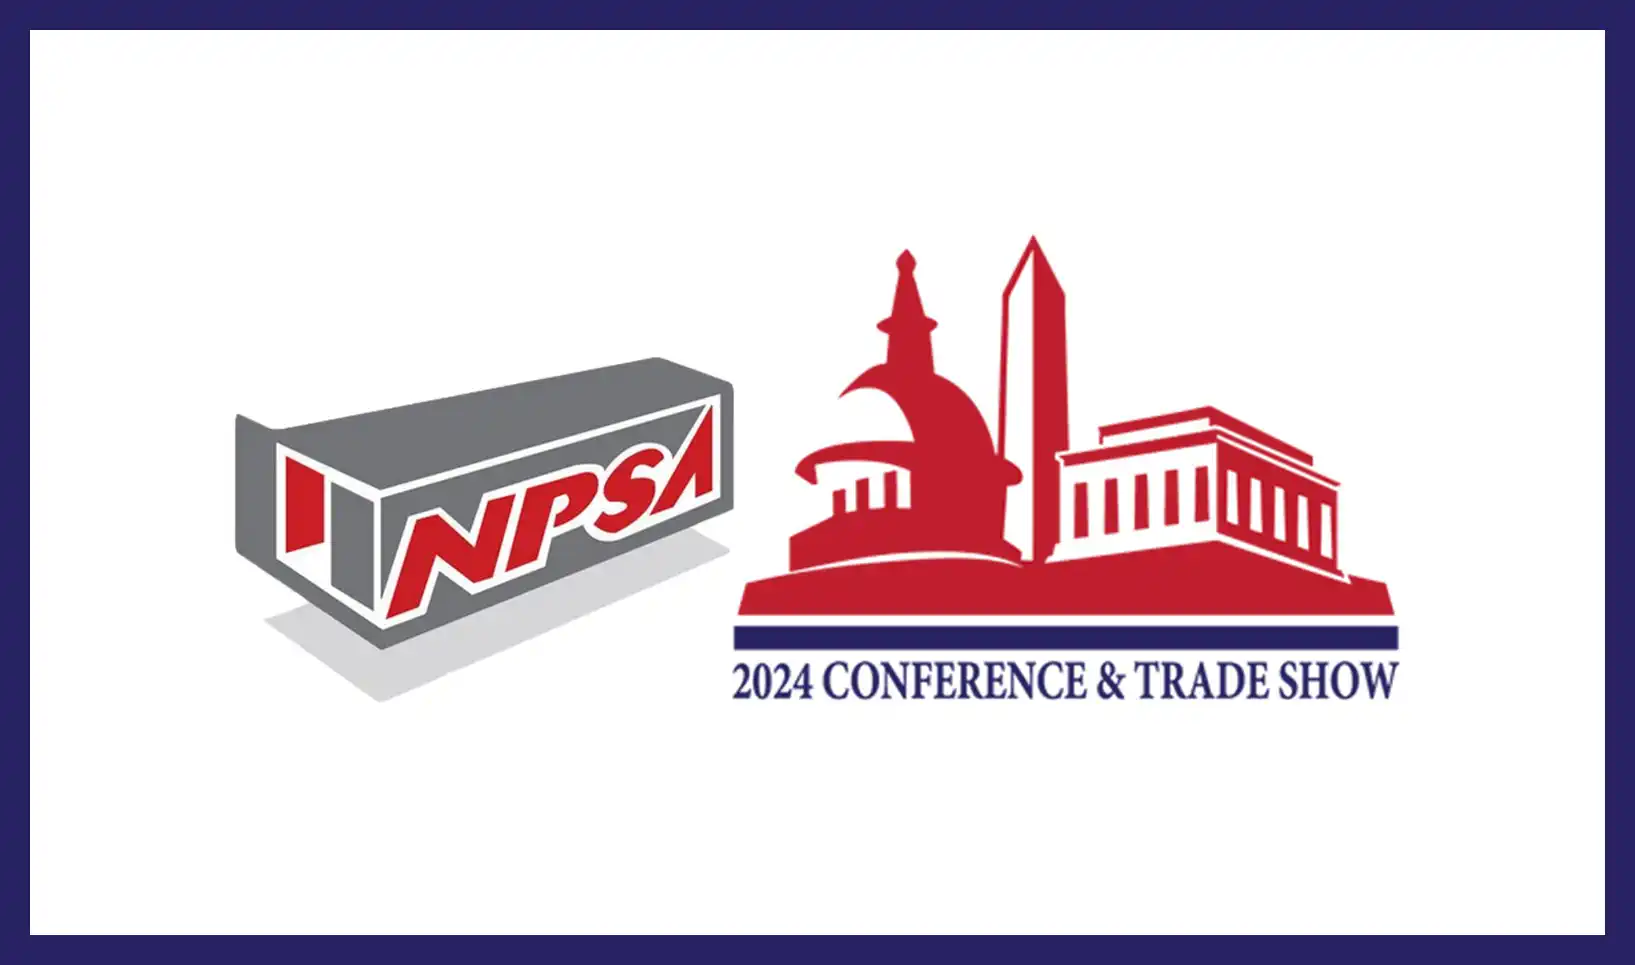 NPSA Conference & Trade Show